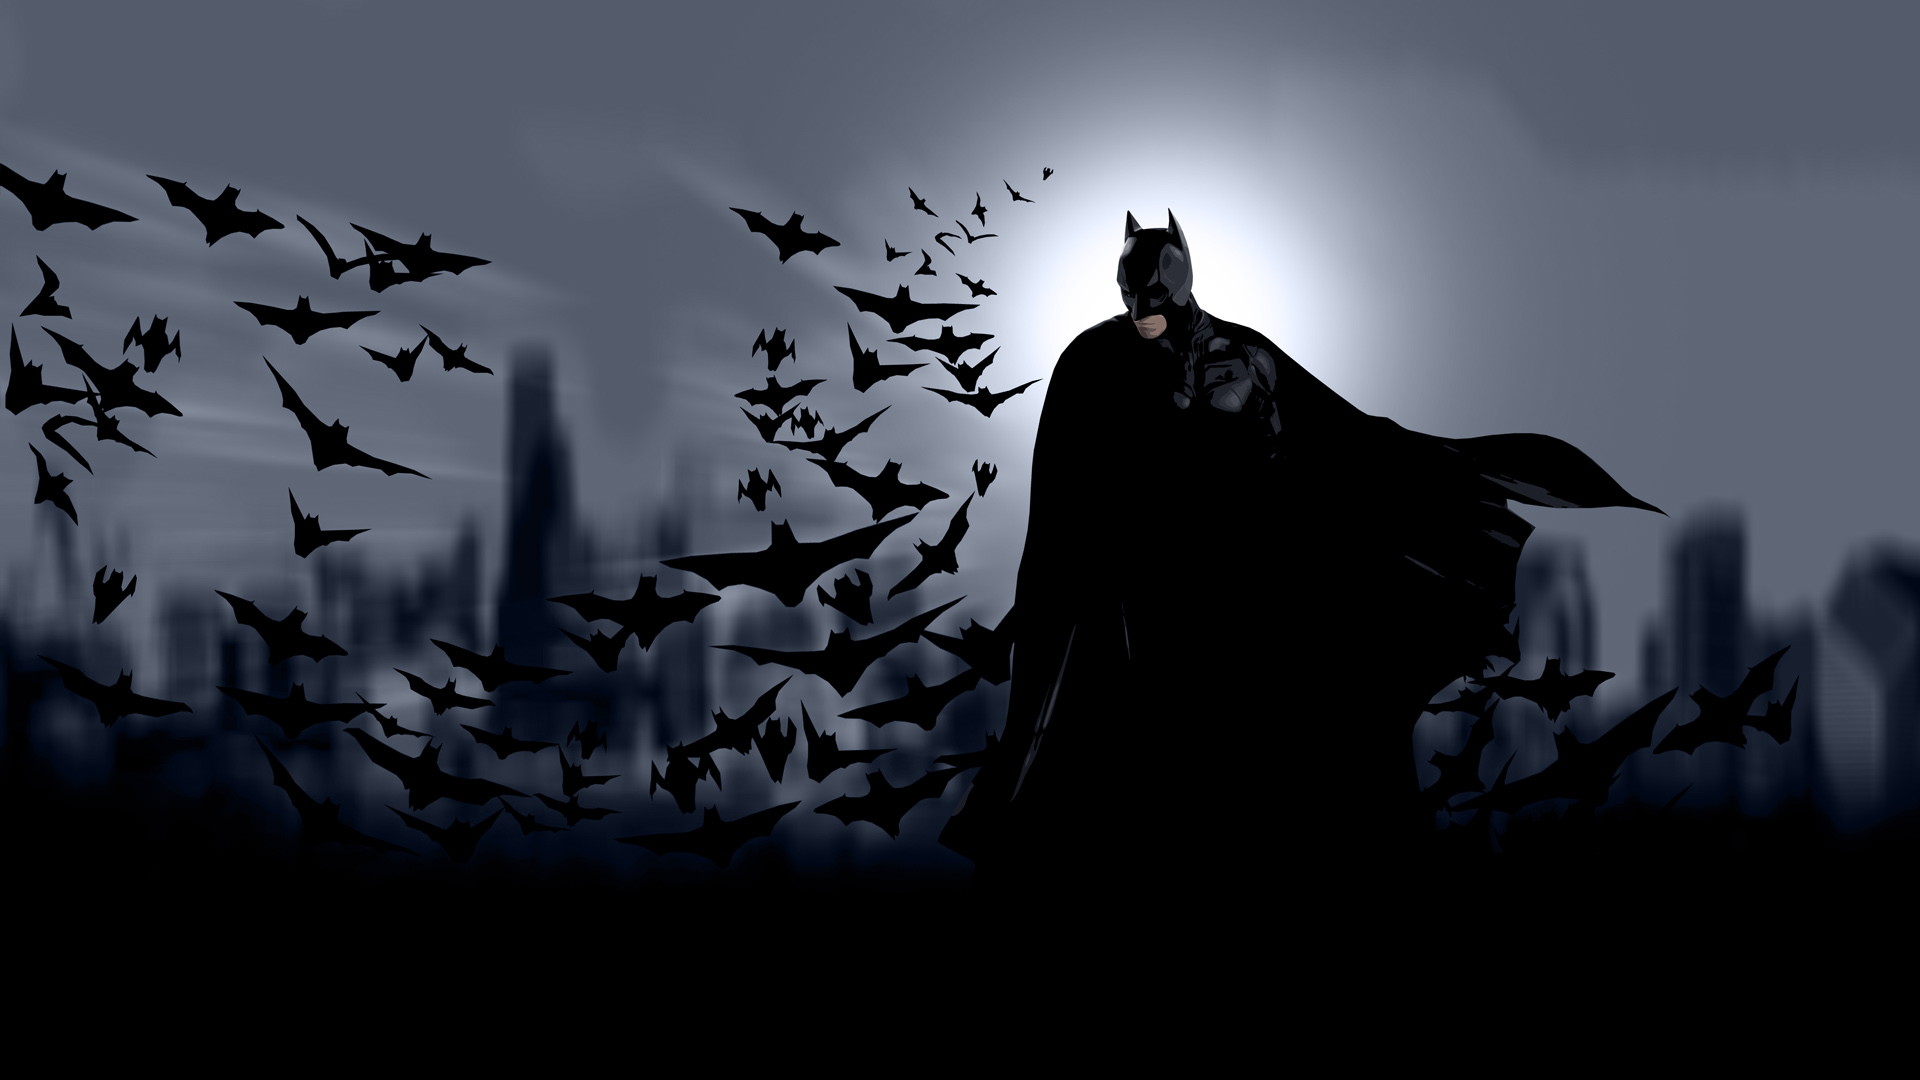 523010 Bild herunterladen the batman, filme, batman, batman begins, dc comics - Hintergrundbilder und Bildschirmschoner kostenlos